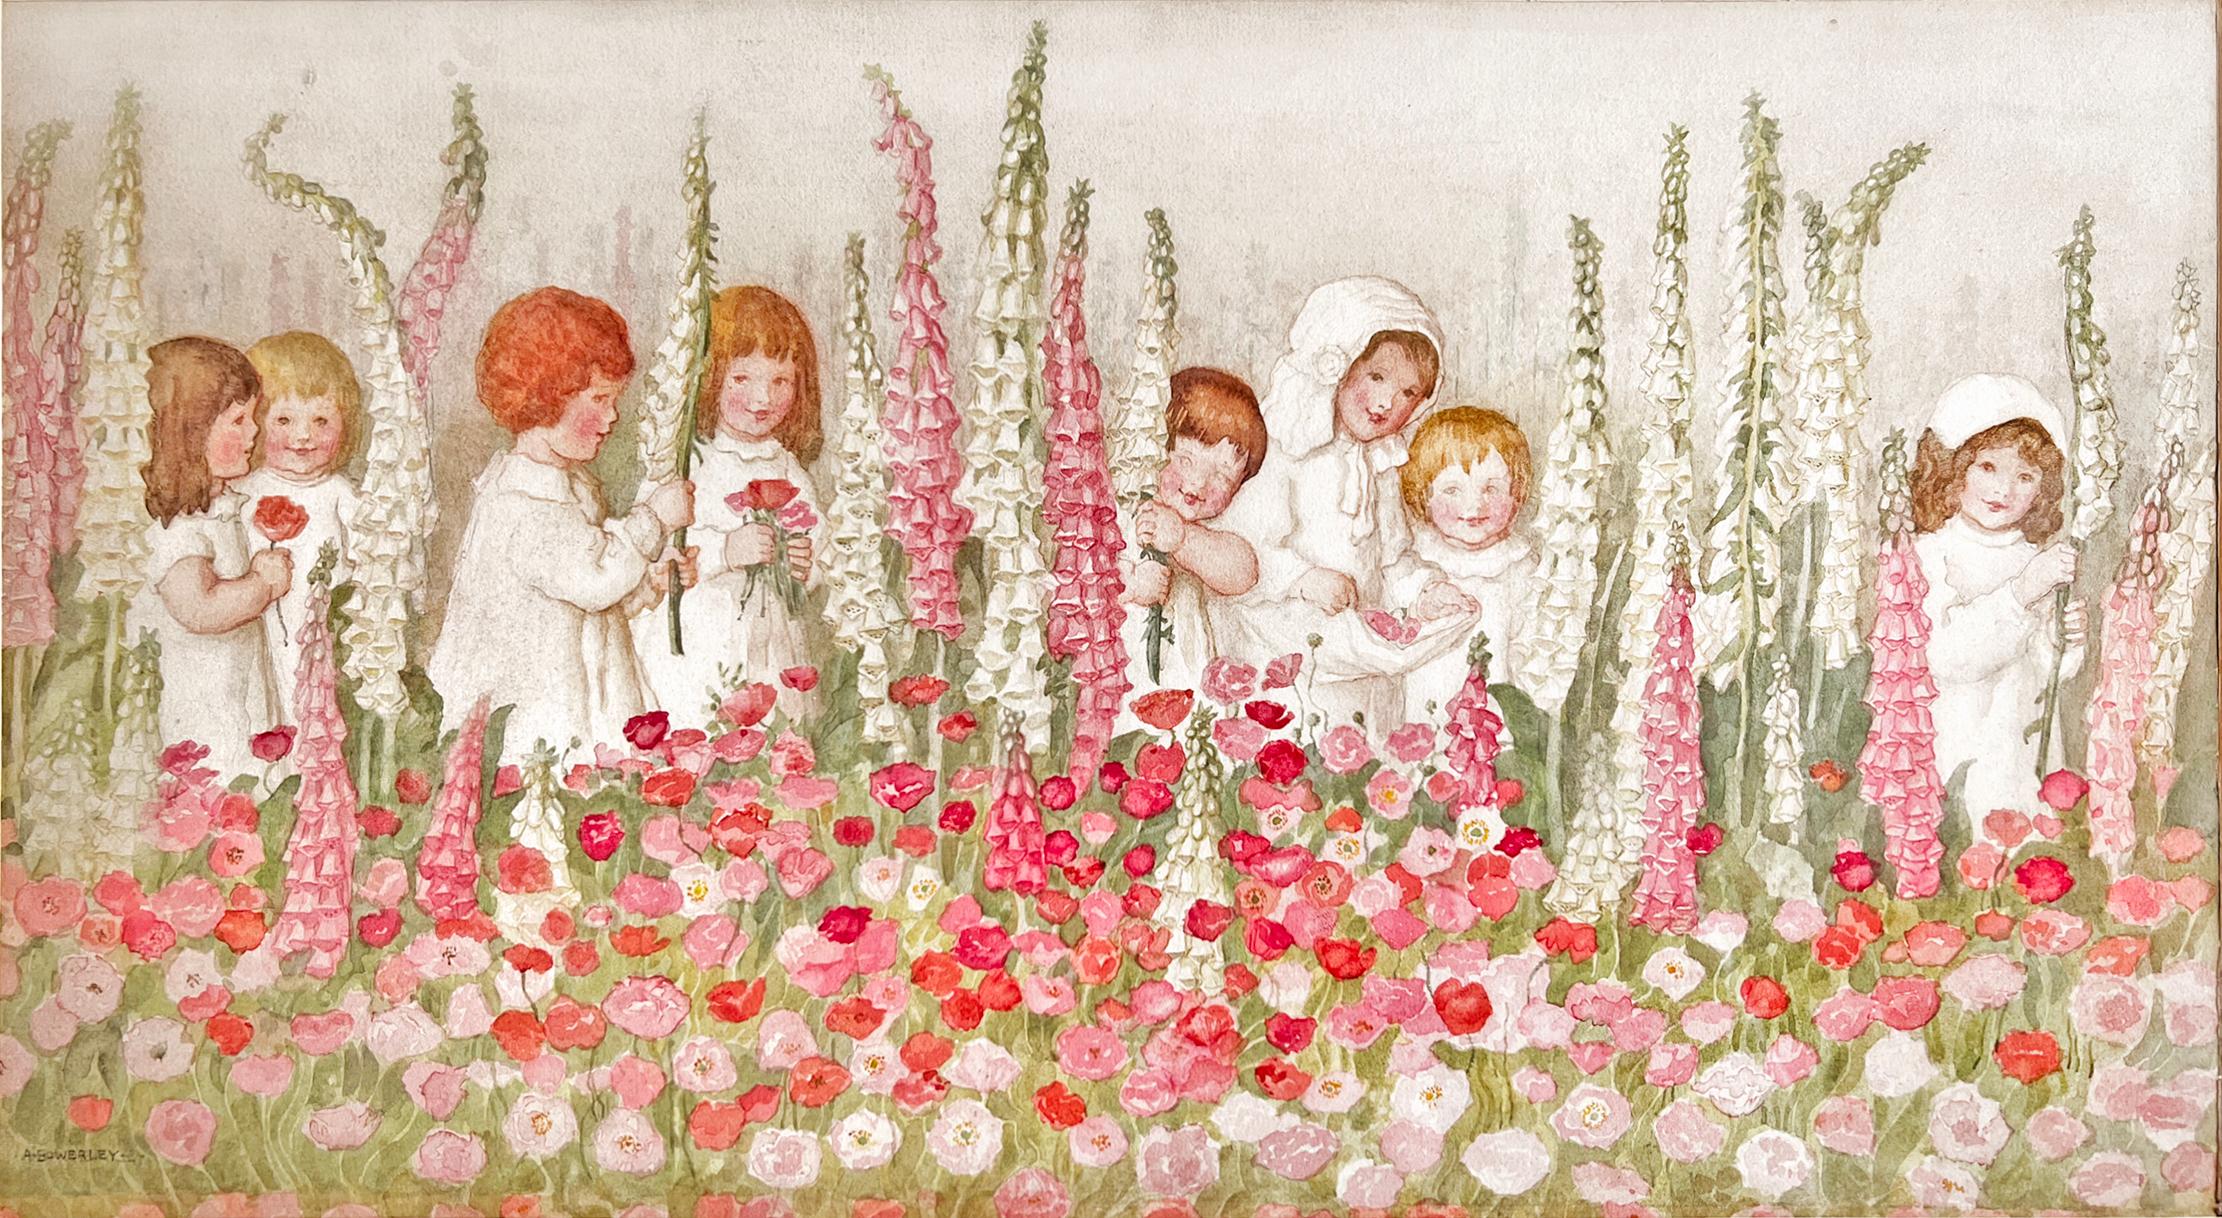 Amelia Bauerle  ( Bowerley )  Landscape Art - Children Amongst Foxgloves - Pink Flowers, Female Illustrator of The Golden Age